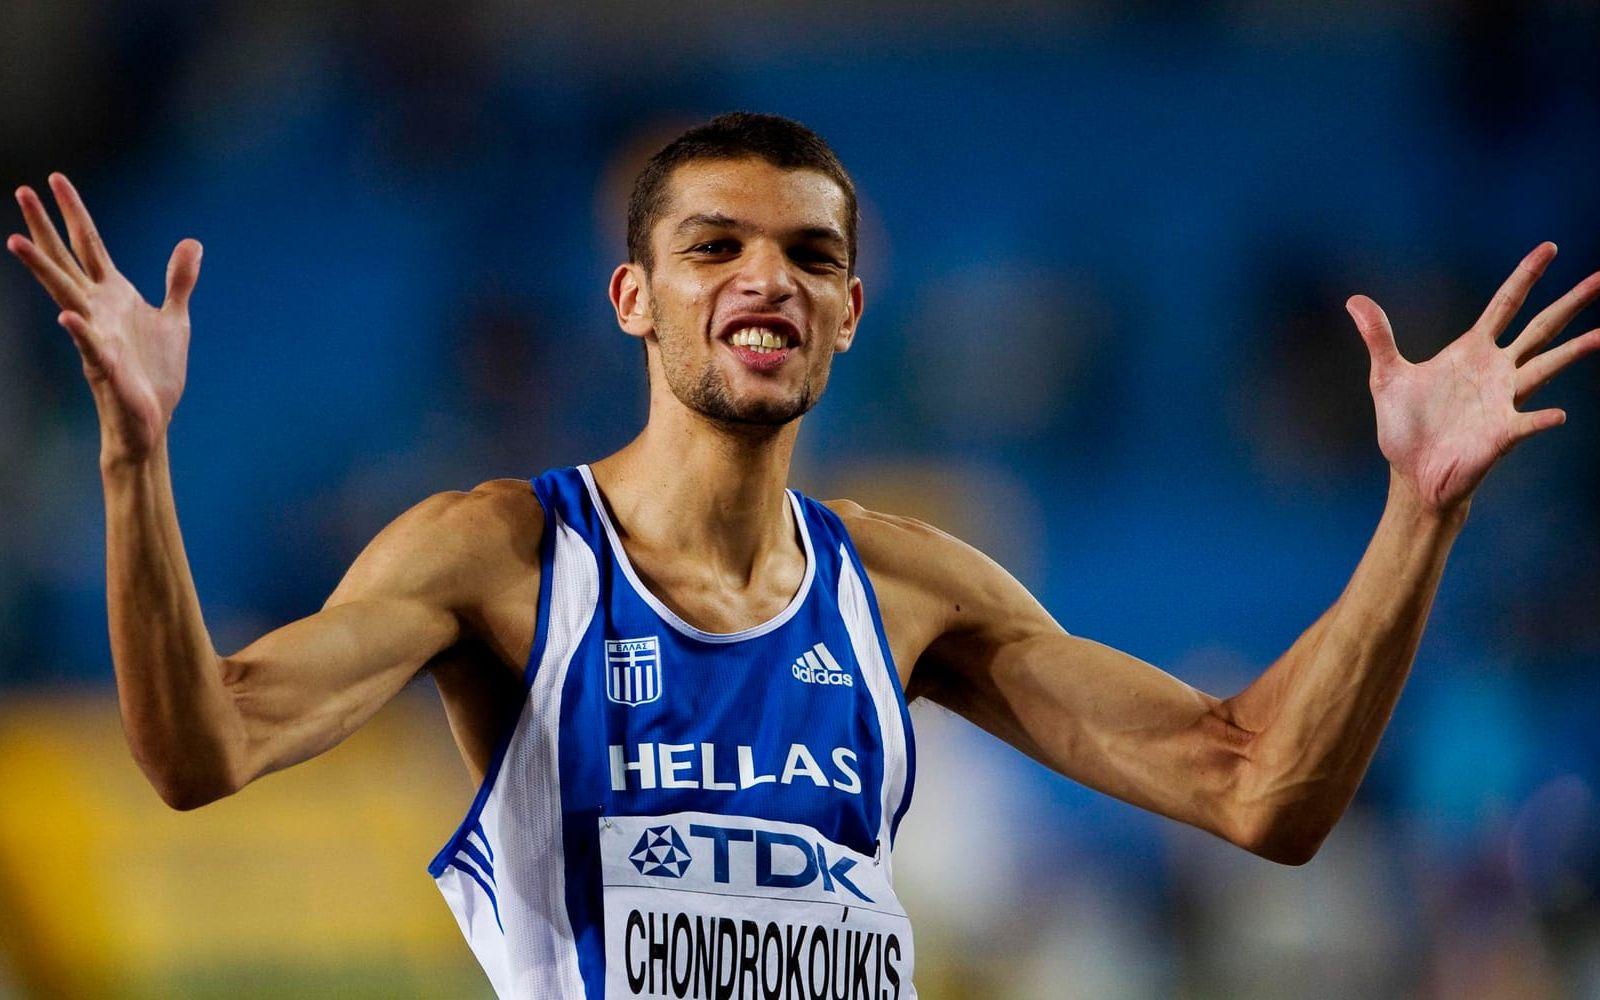 Dimitrios Chondrokoukis, Grekland. Fälldes 2012, tävlar i höjdhopp.